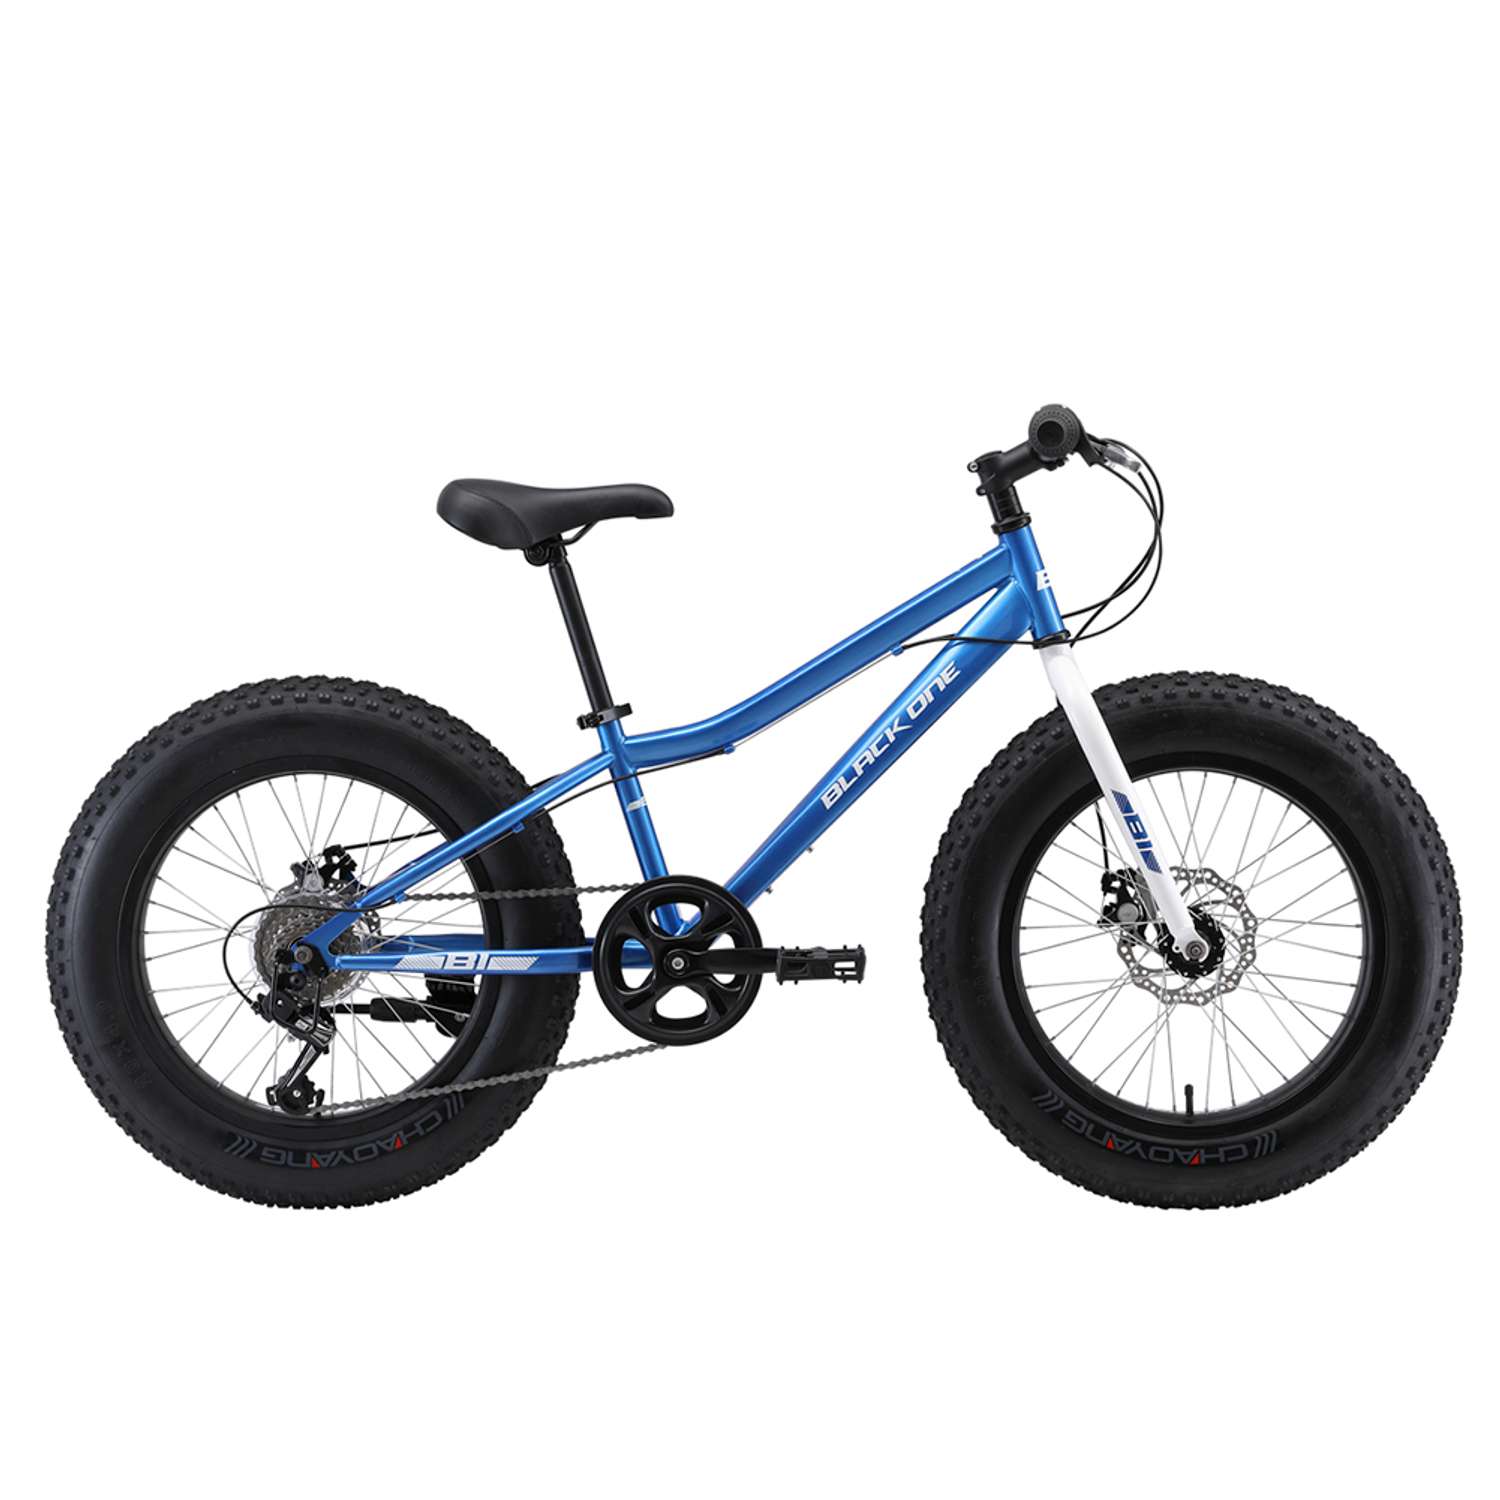 Велосипед Black one Monster 20 D синий/серебристый - фото 1